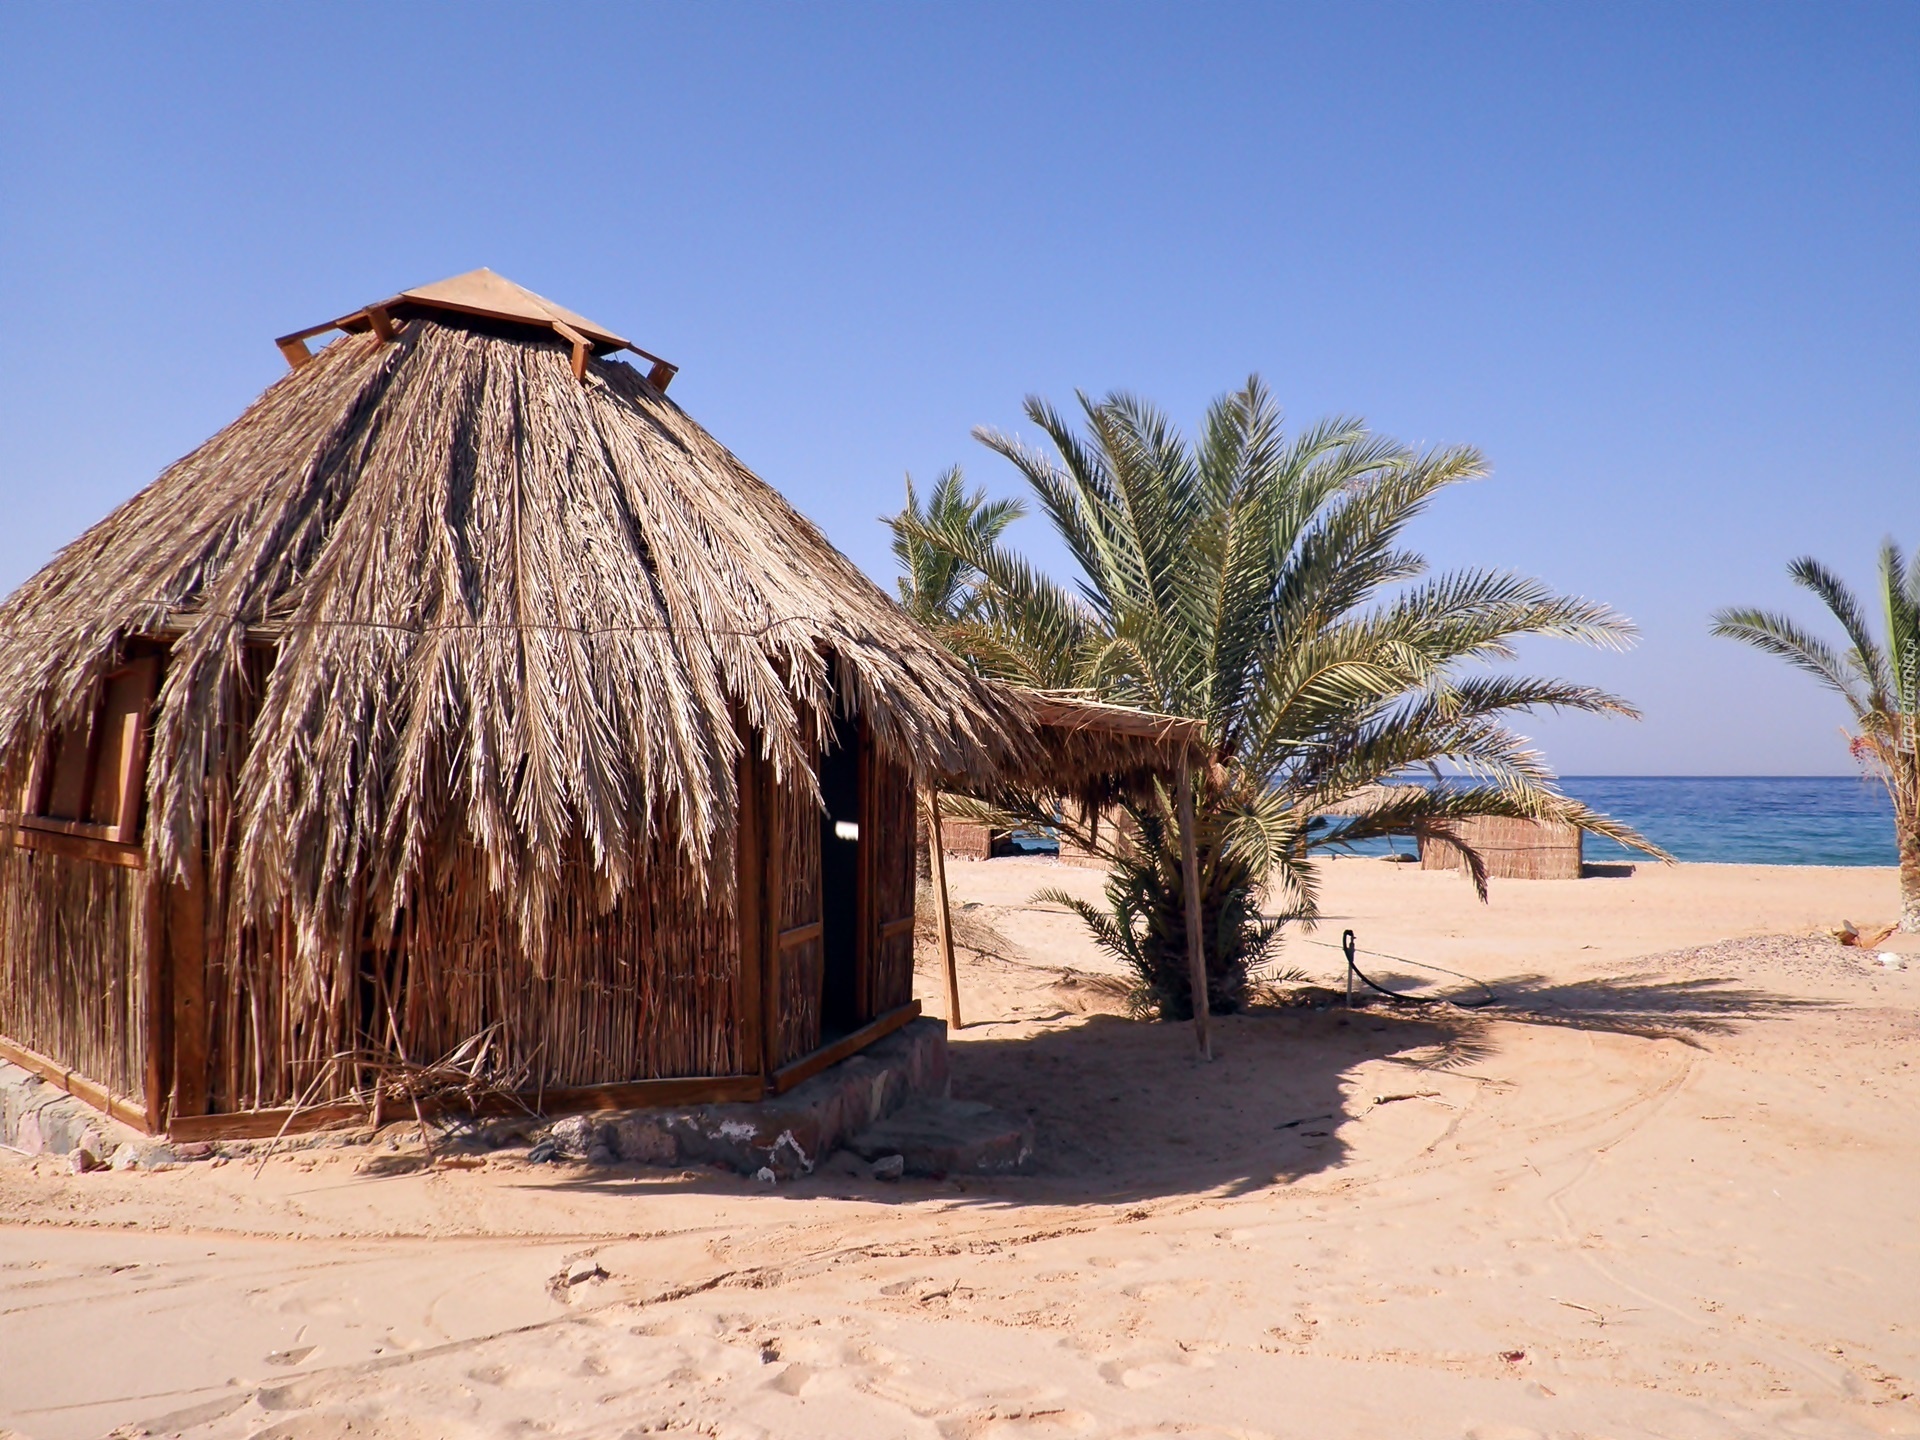 Бич хат. The Beach Hut. Пляж с пальмами. Море вилла пальмы. Huts on the Beach.